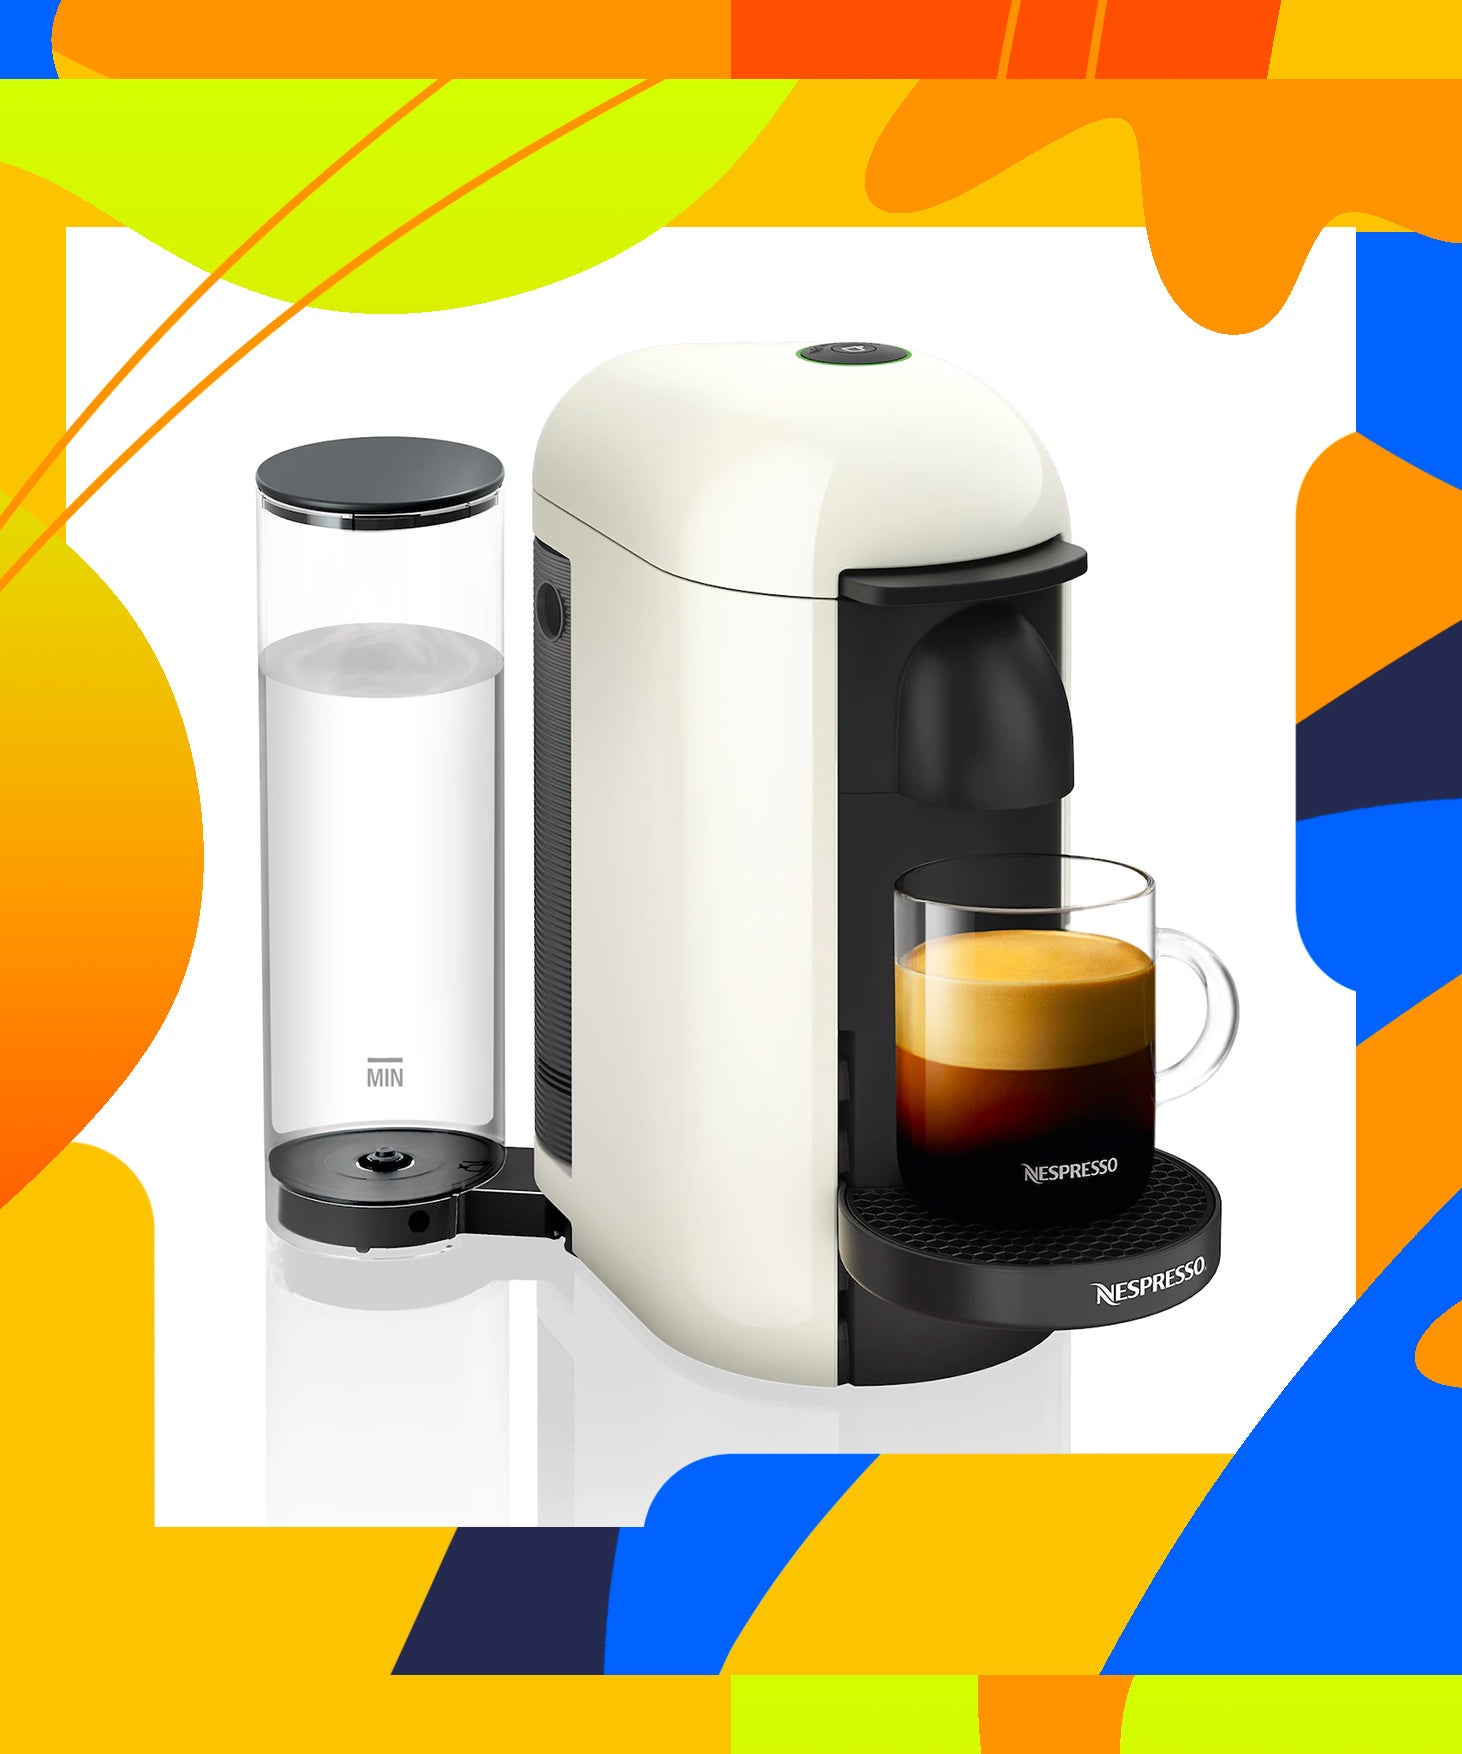 CHEFMAN -InstaCoffee Single Serve Grounds/K-Cup Pod Coffee Maker